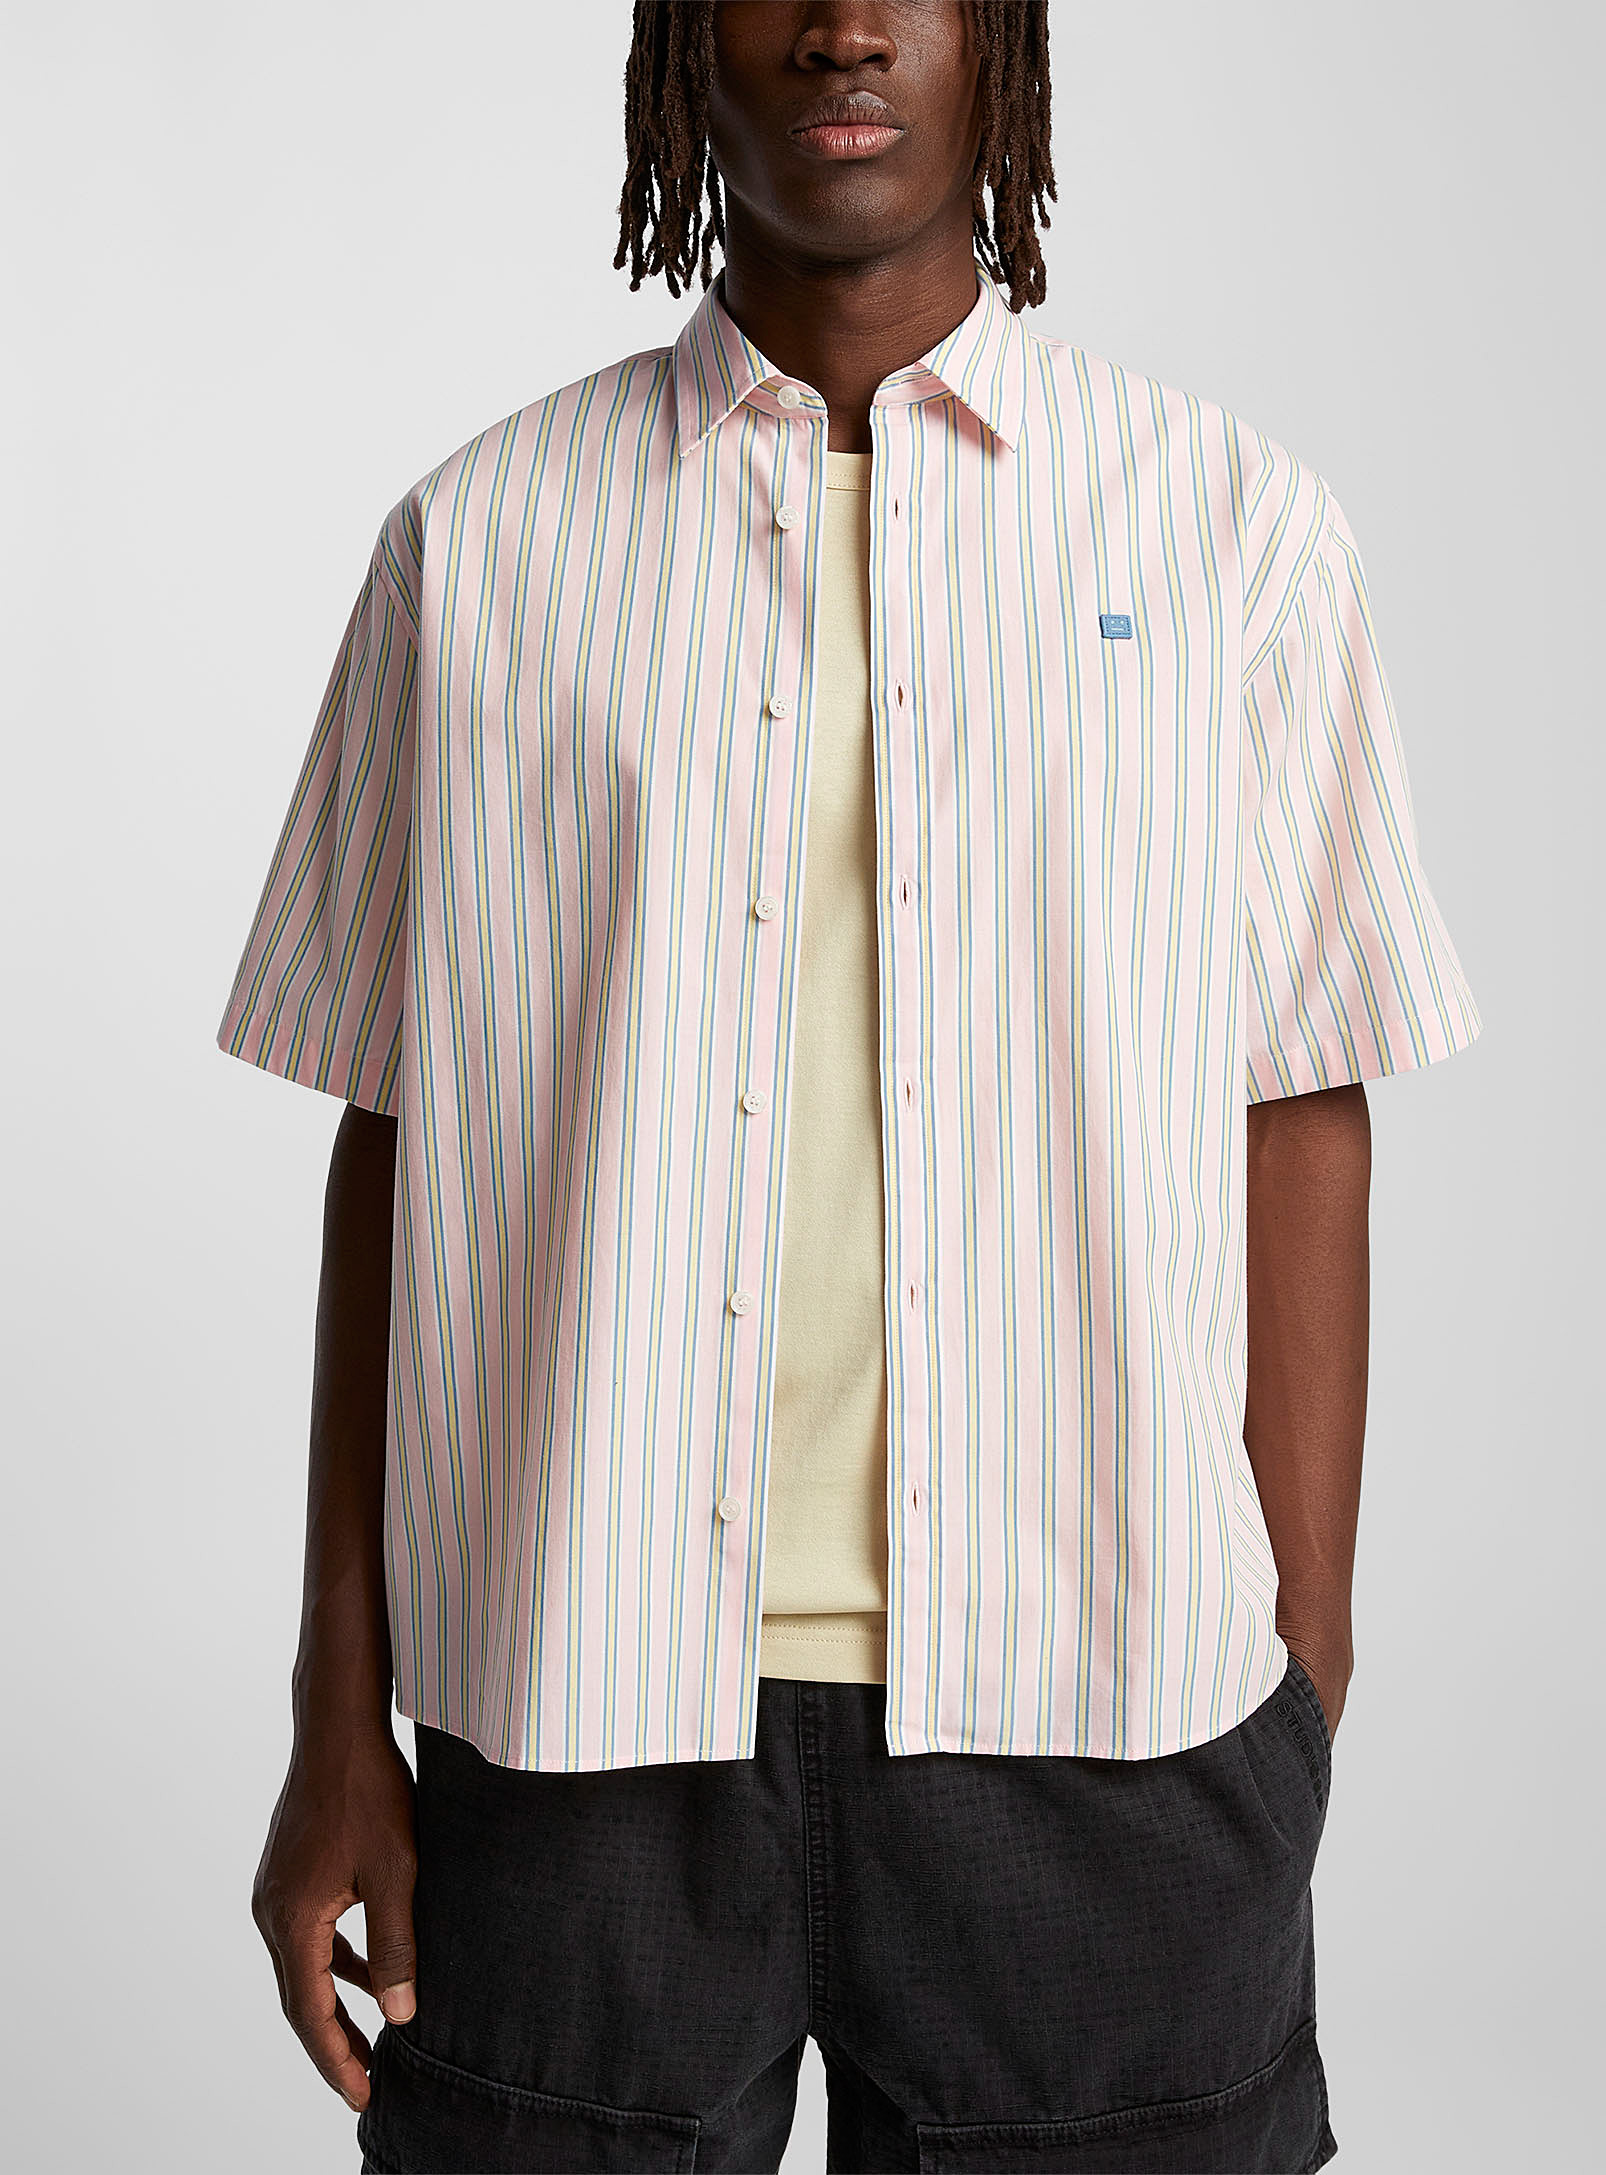 Acne Studios - Men's Short-sleeve striped pink shirt